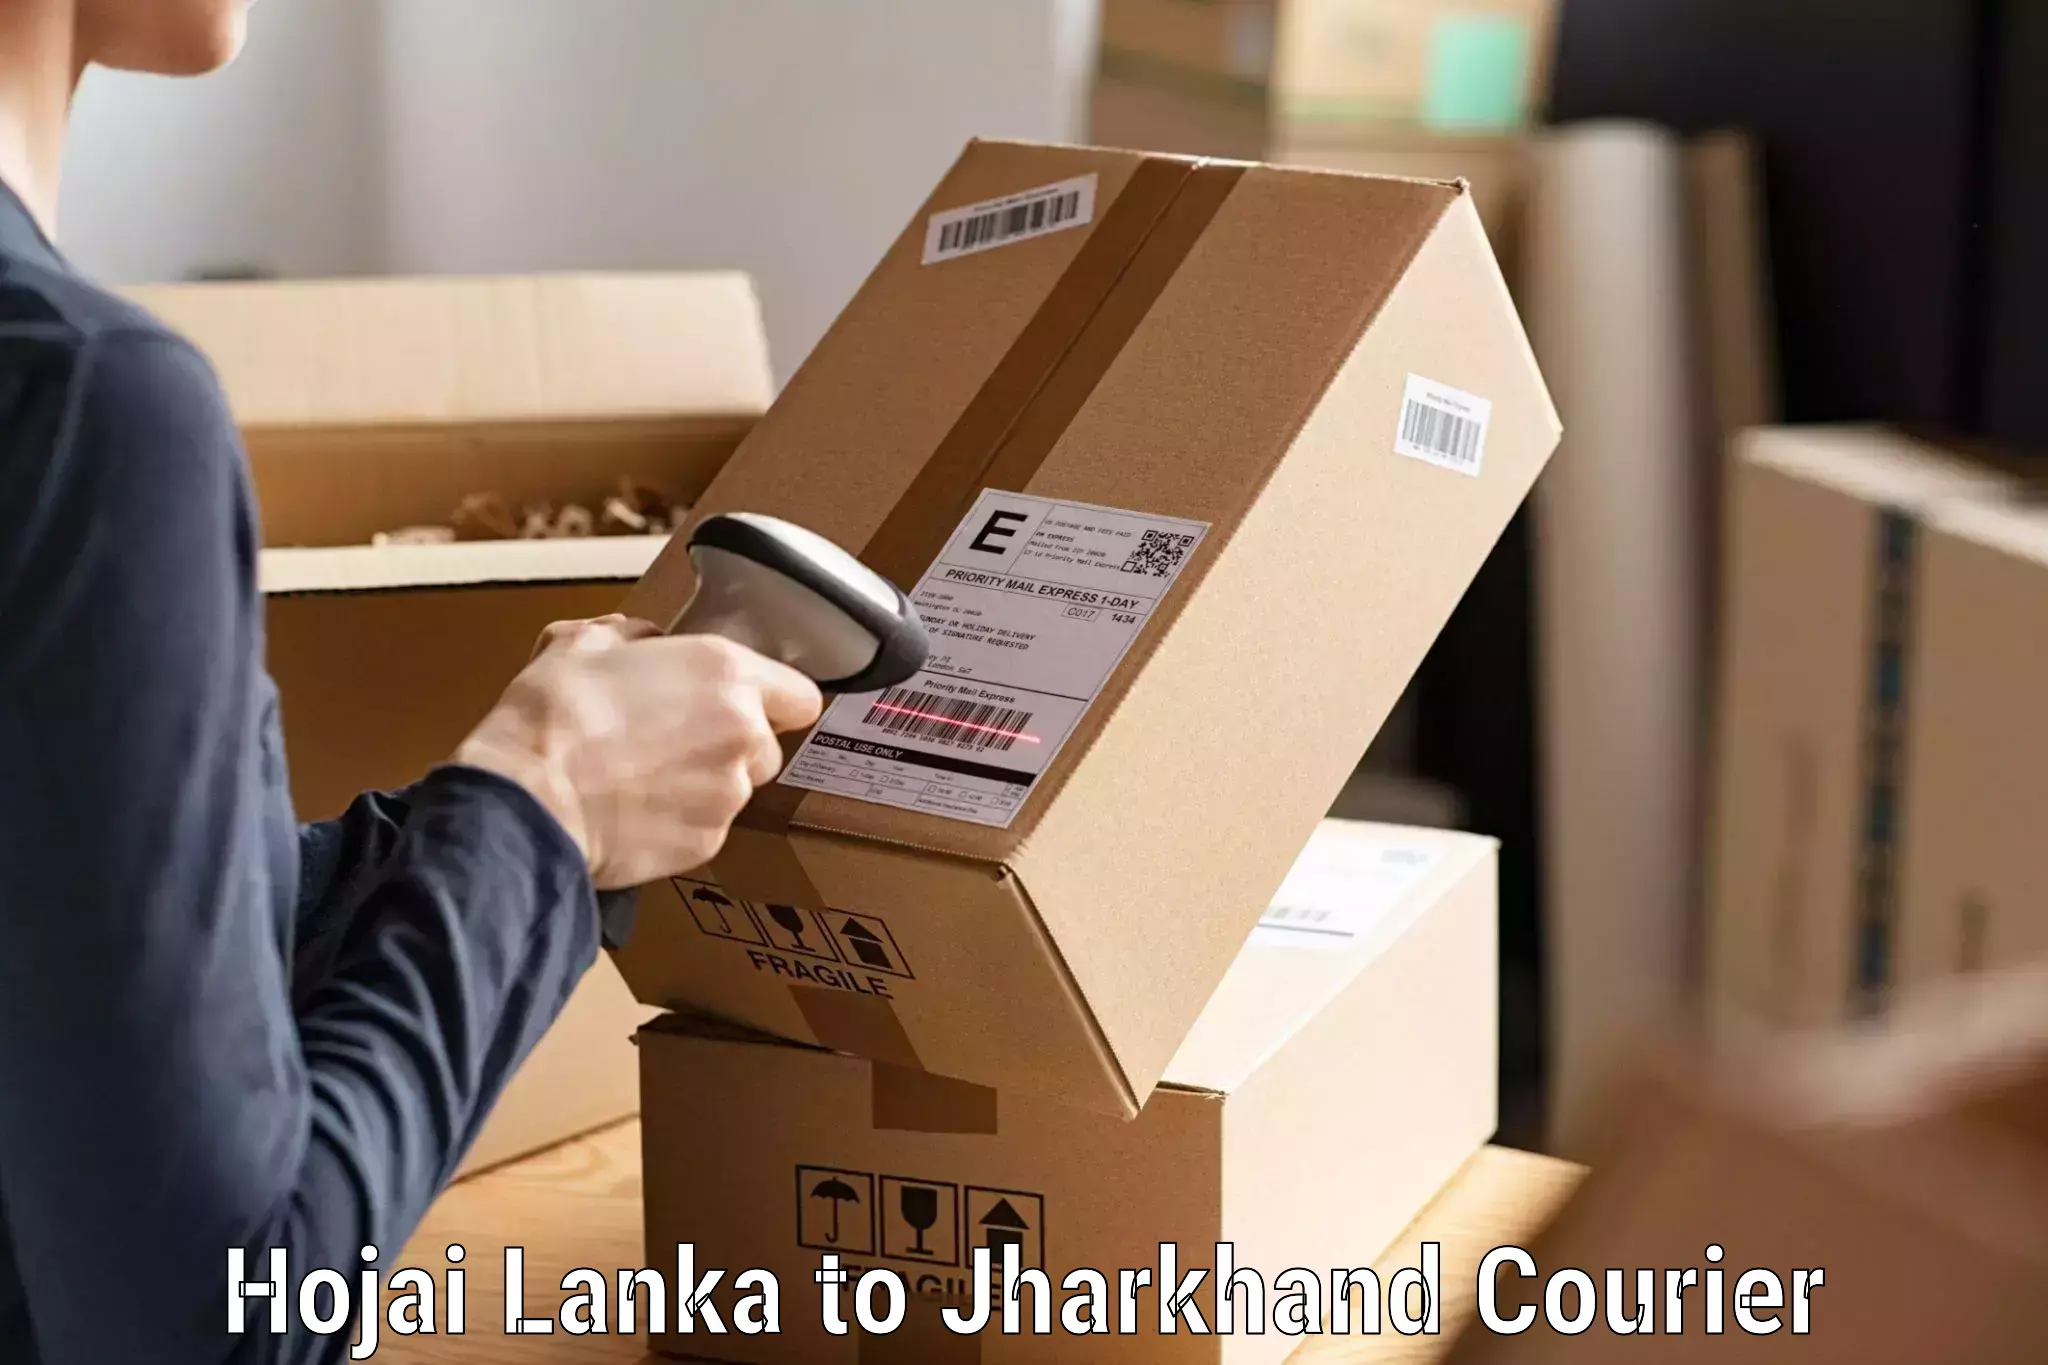 Specialized shipment handling Hojai Lanka to Poreyahat